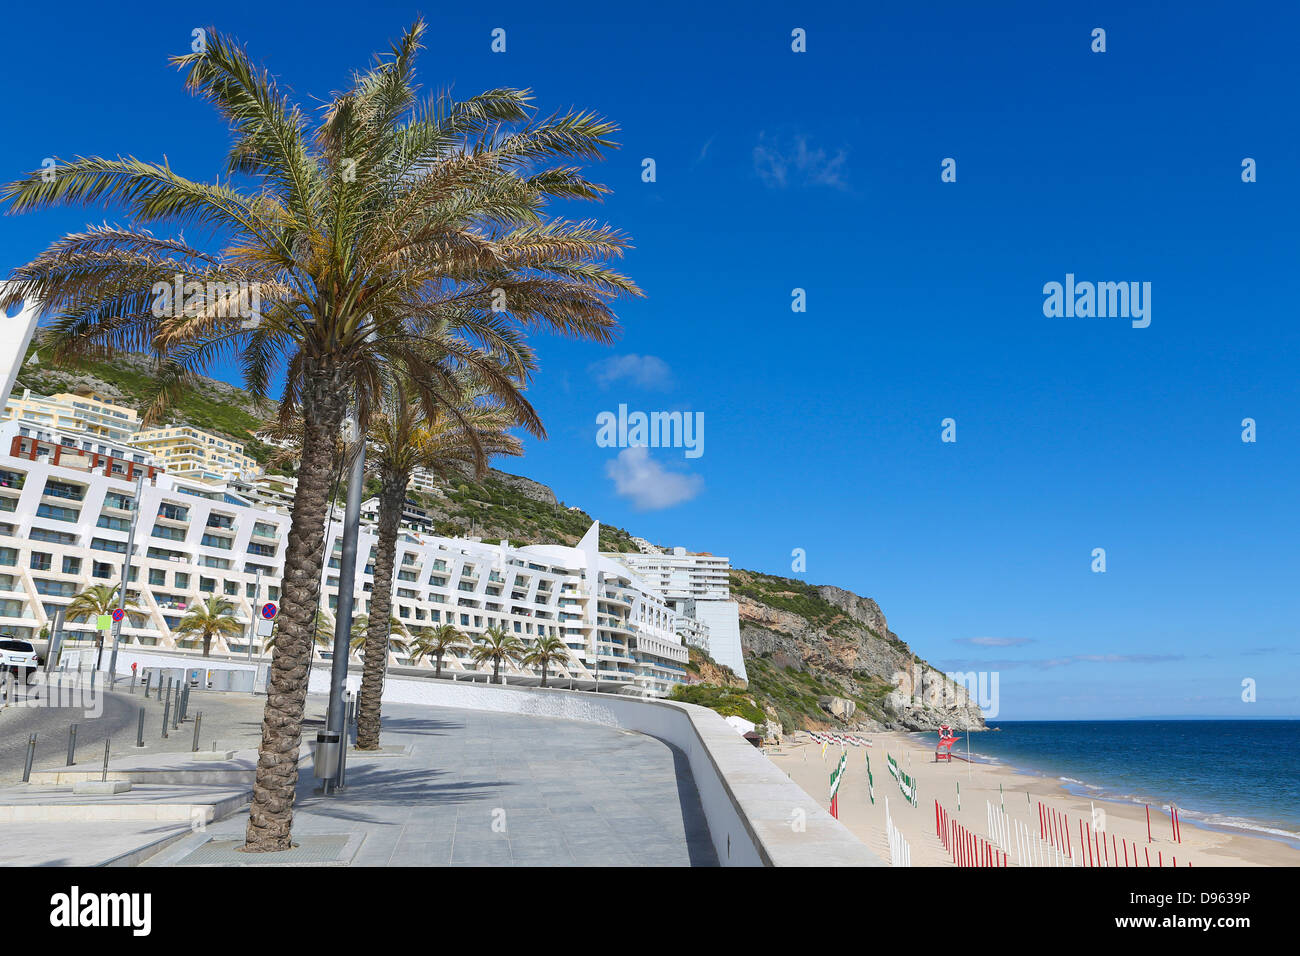 Promenade near the beach and the Atlantic coast of Sesimbra, Portugal. Stock Photo